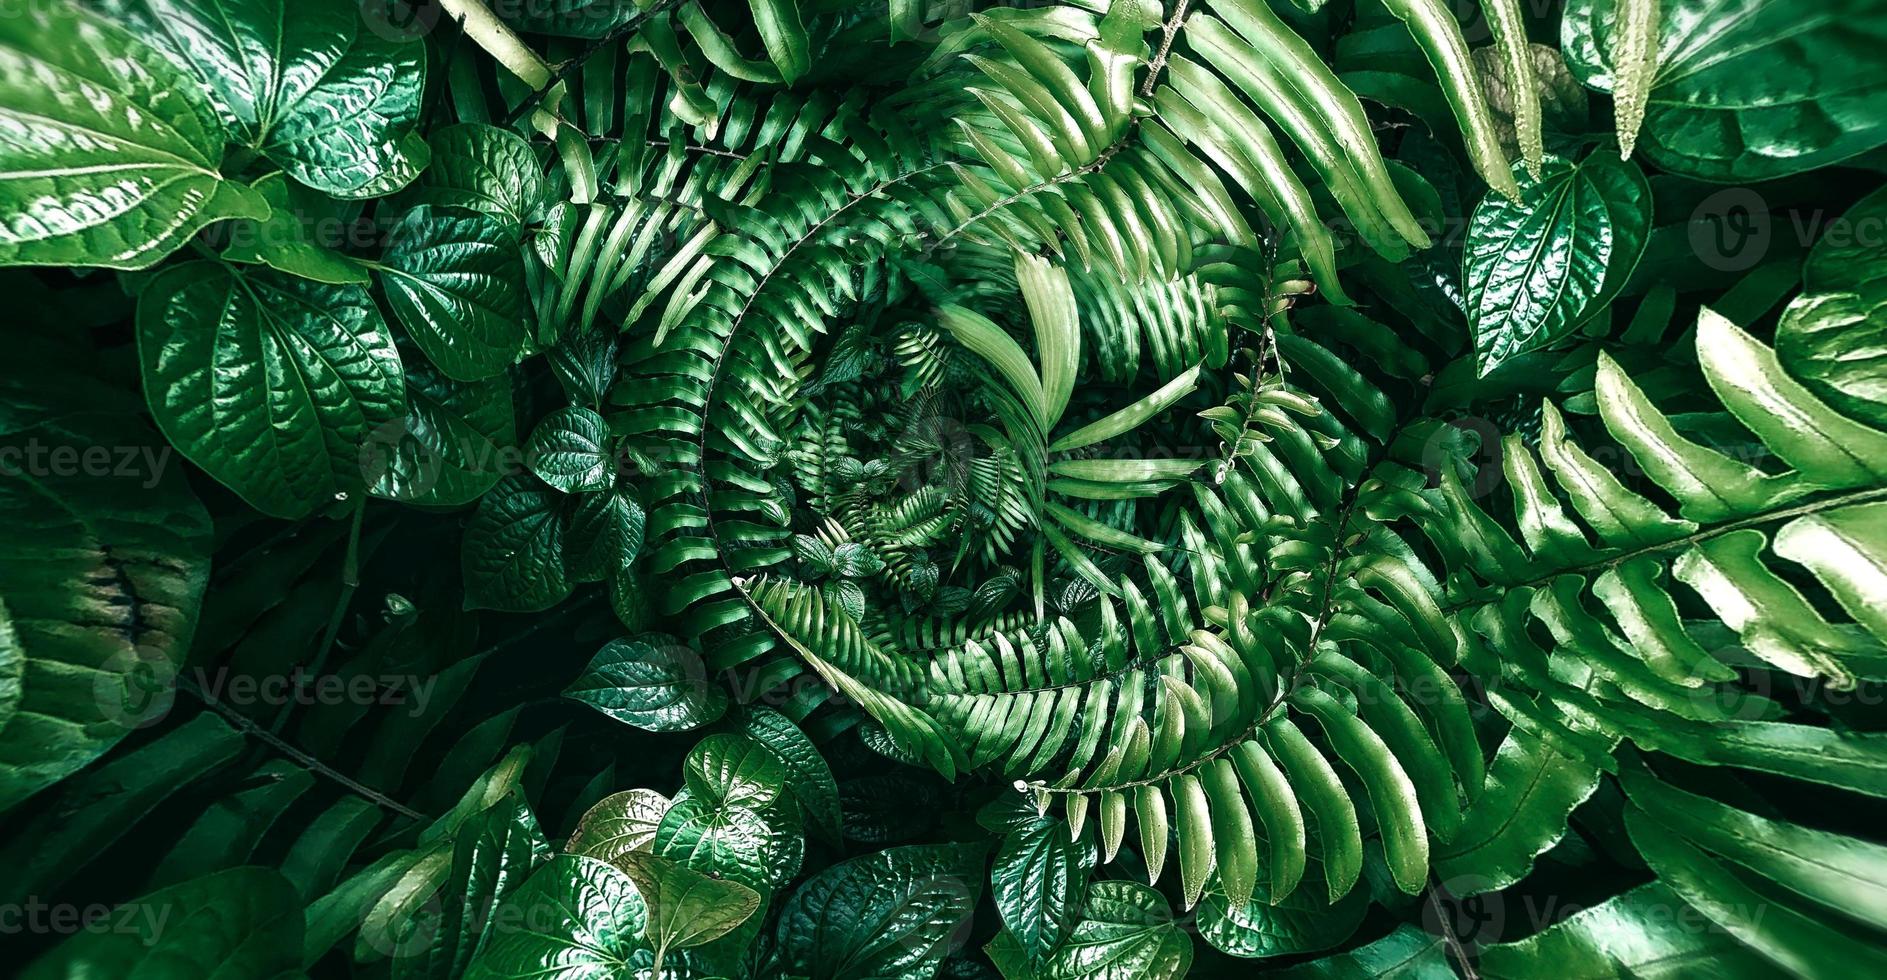 tropiskt grönt blad i mörk ton foto